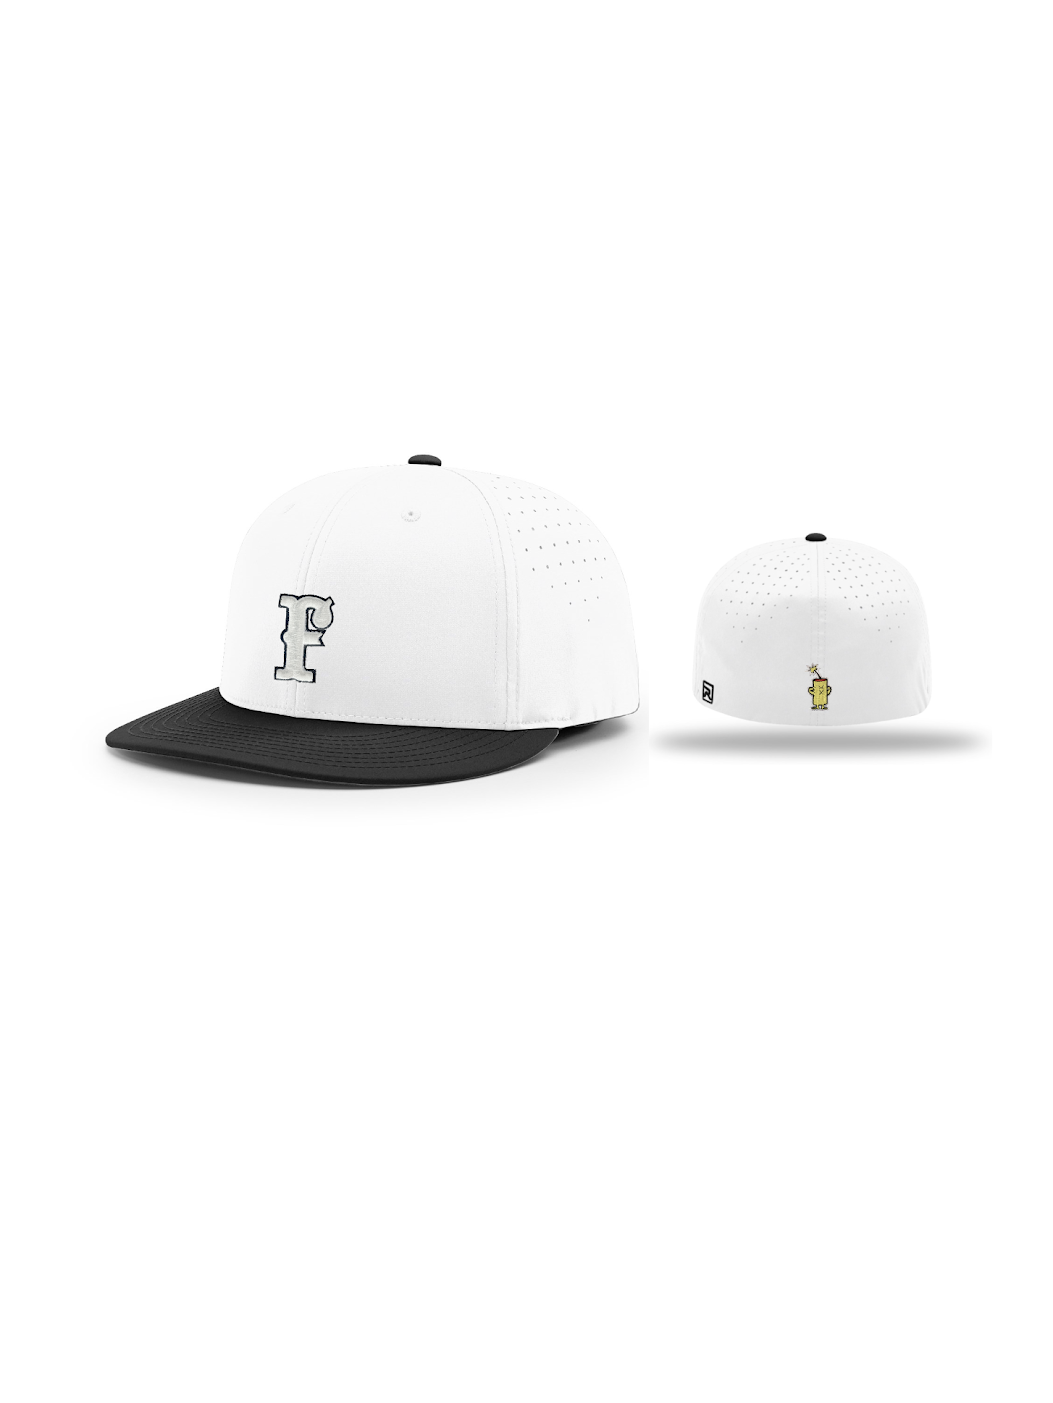 FC R-FLEX Hat (White/Black) - Gear Softball Firecracker